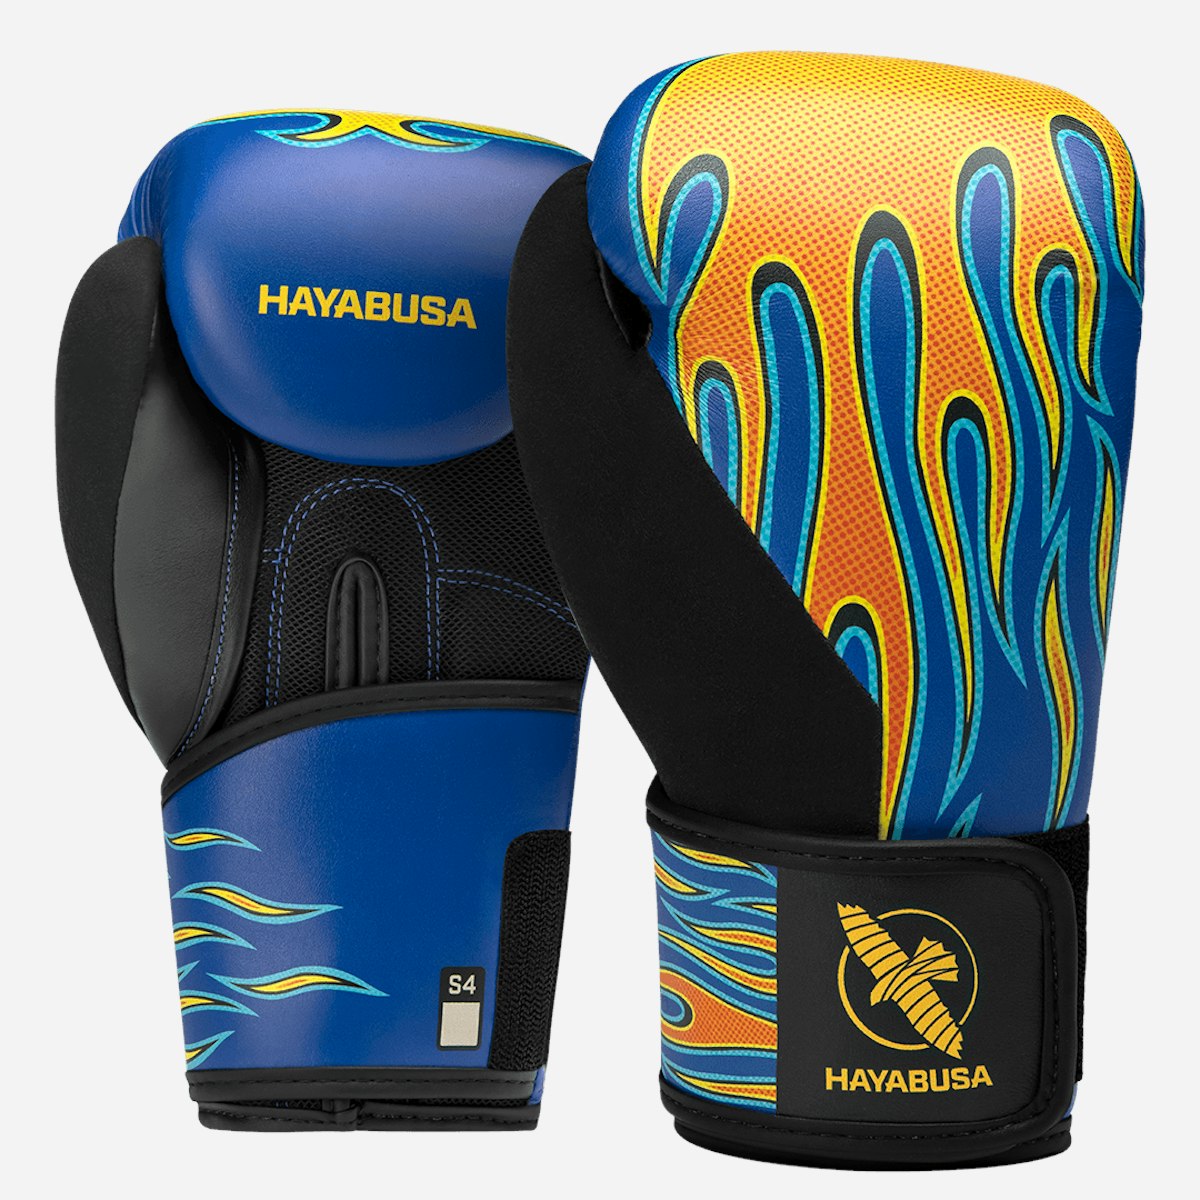 Hayabusa S4 Youth Epic Boxing Gloves For Kids • Hayabusa Fight